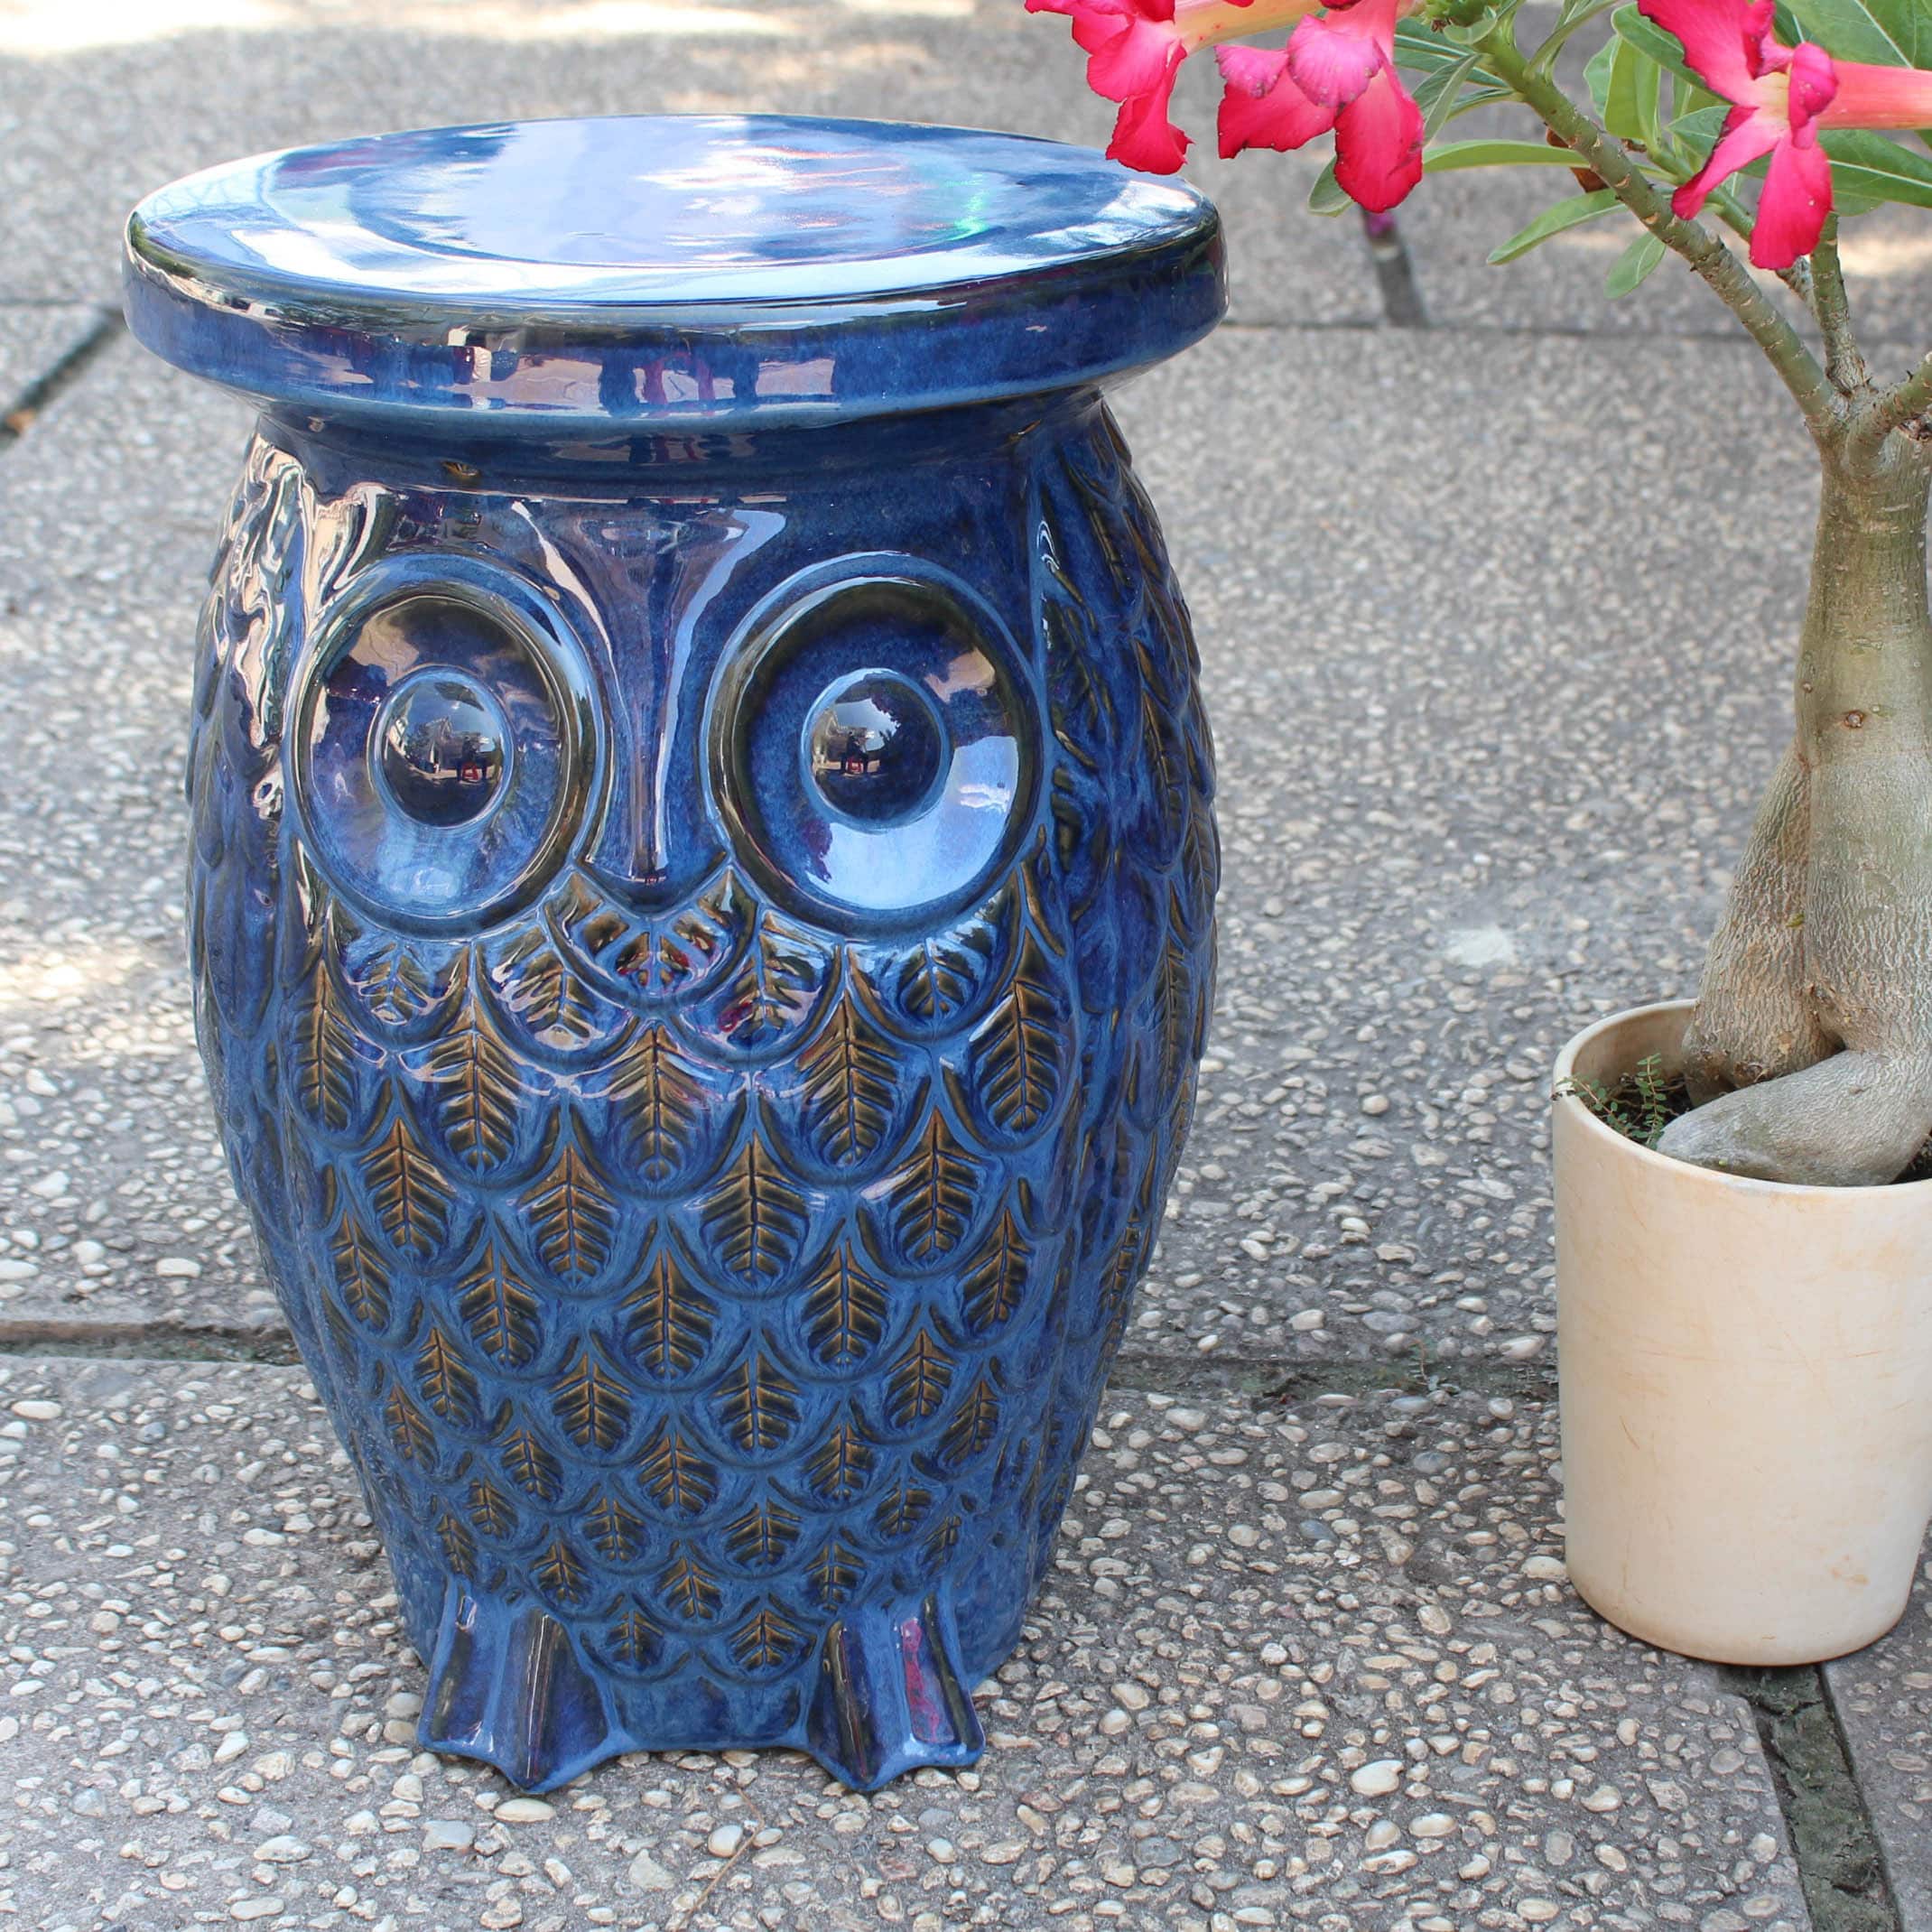 International Caravan Wise Old Owl Ceramic Garden Stool - image 5 of 5